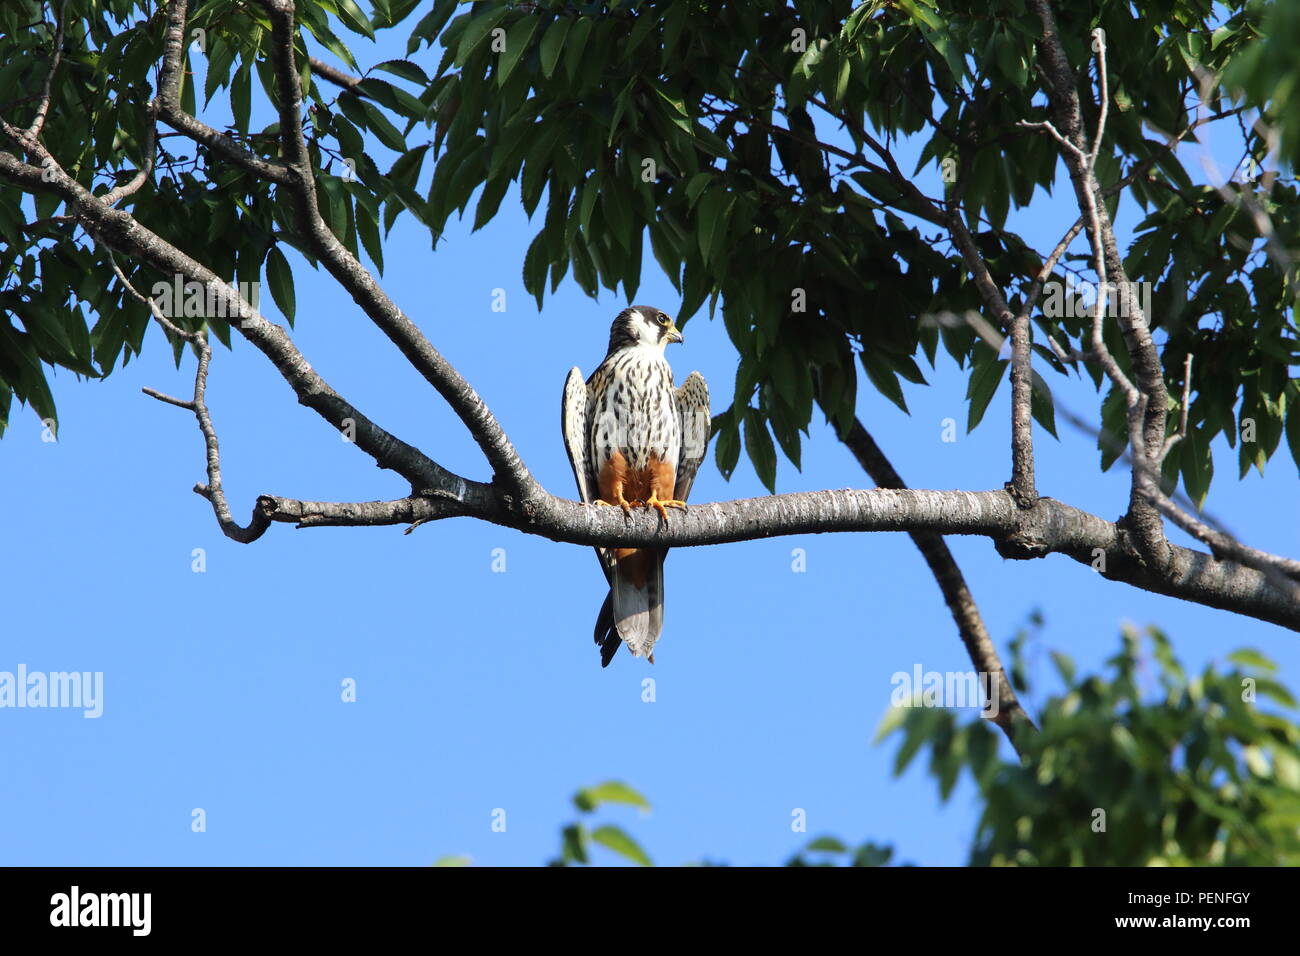 Eurasischen hobby (Falco subbuteo) in Japan Stockfoto